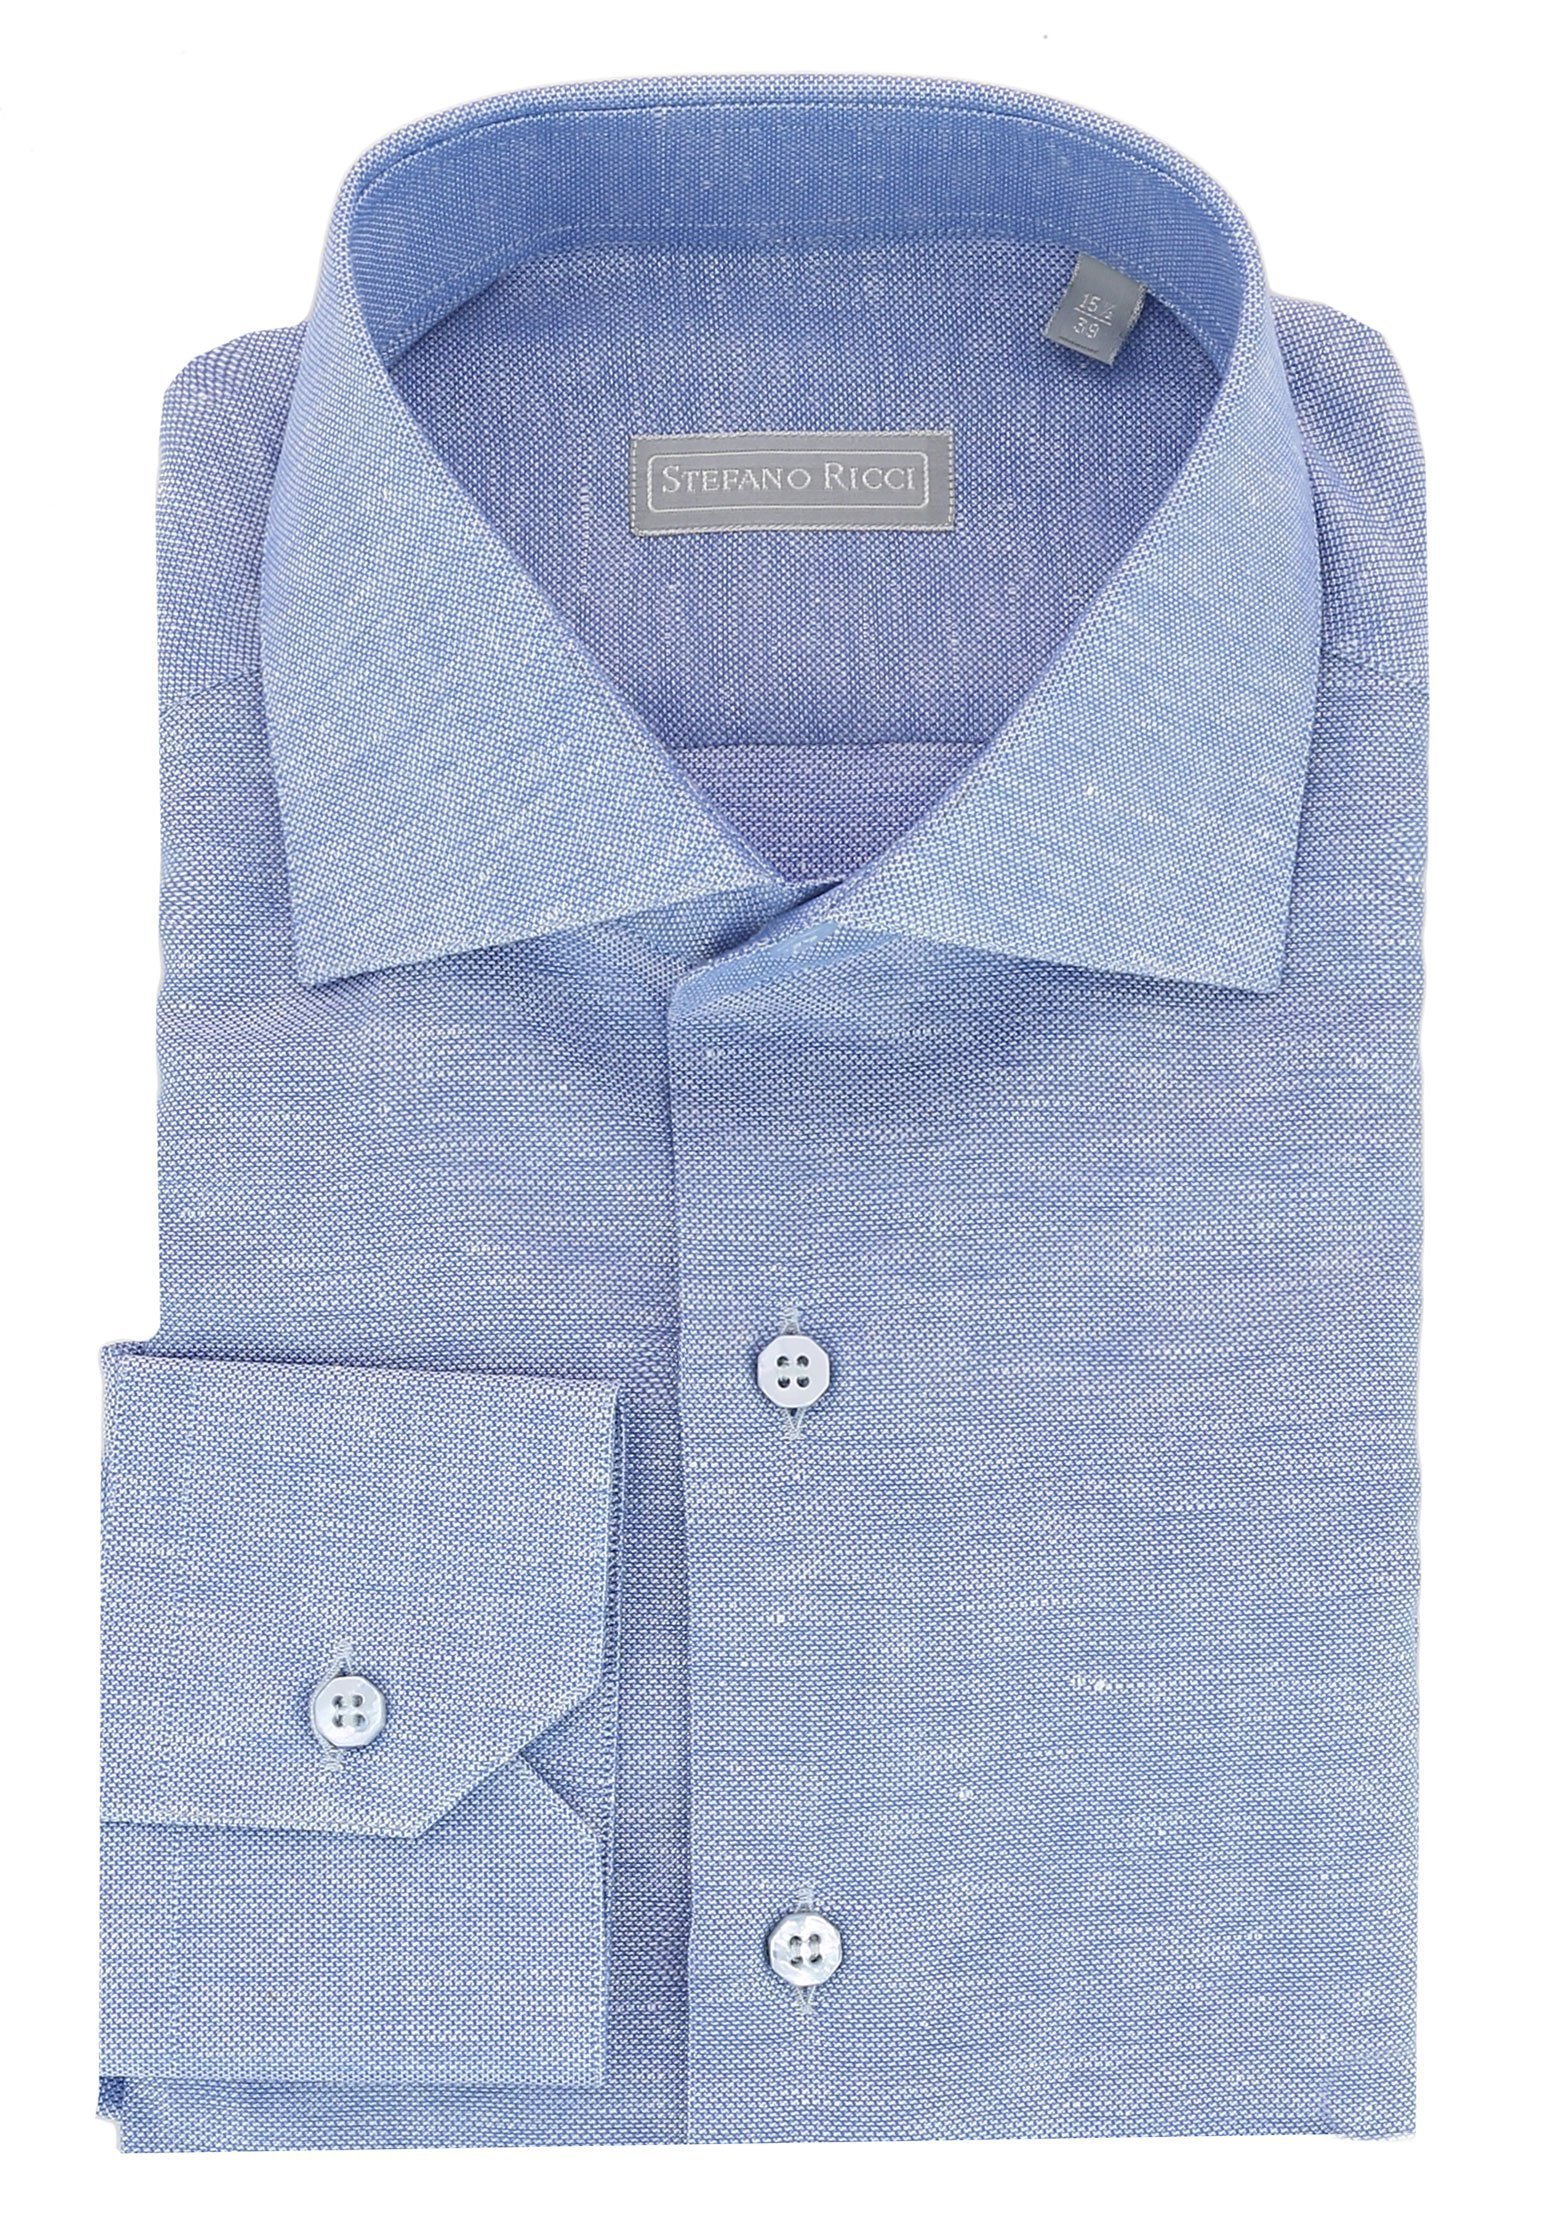 Рубашка STEFANO RICCI Голубой, размер 39 92596 - фото 1